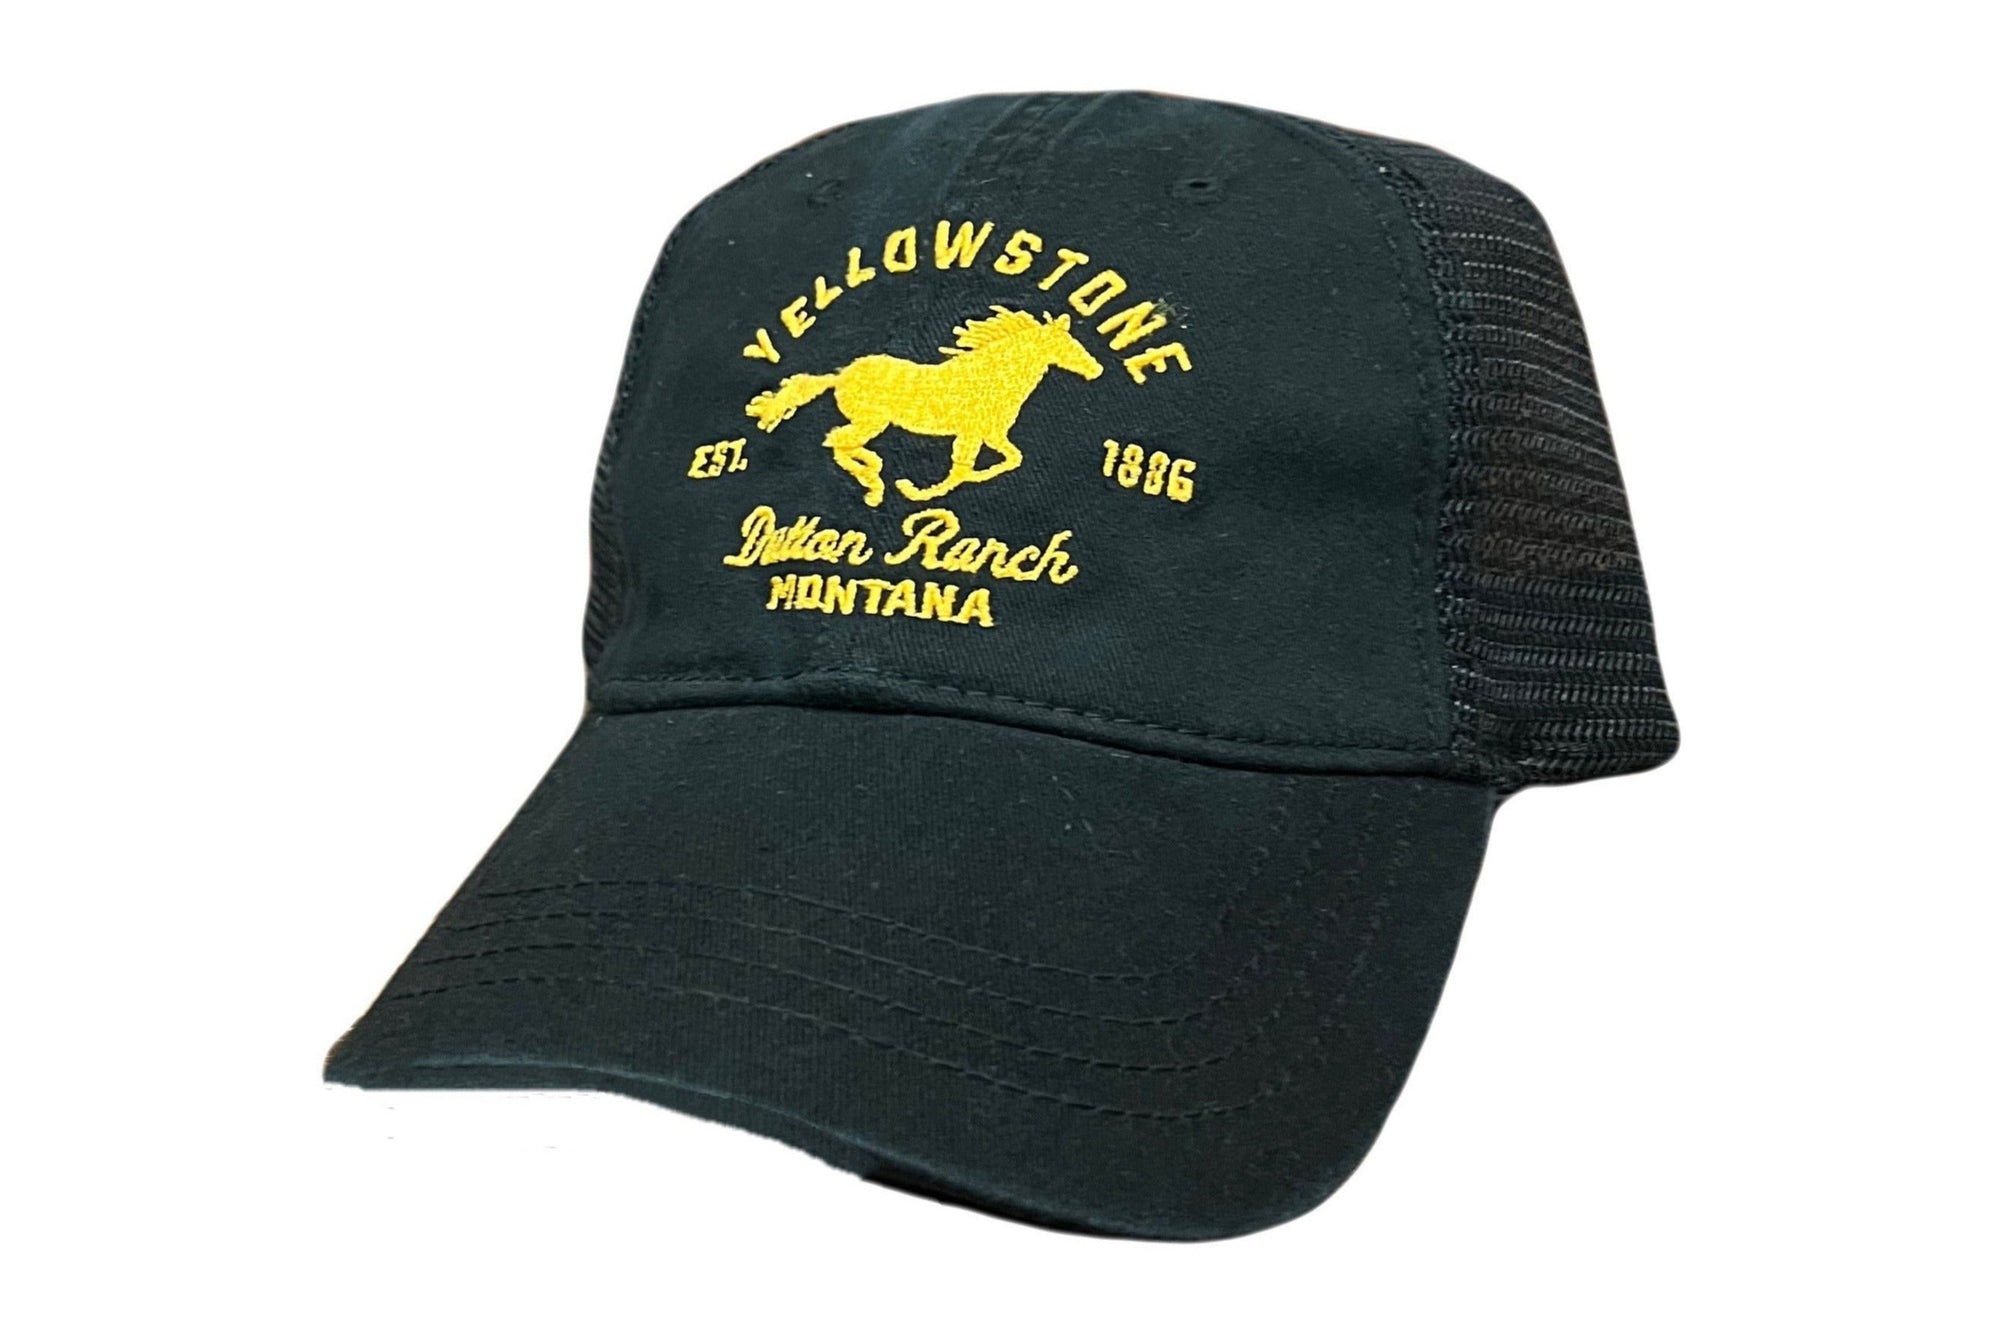 Yellowstone Men's Cap Black STYLE 66-656-15